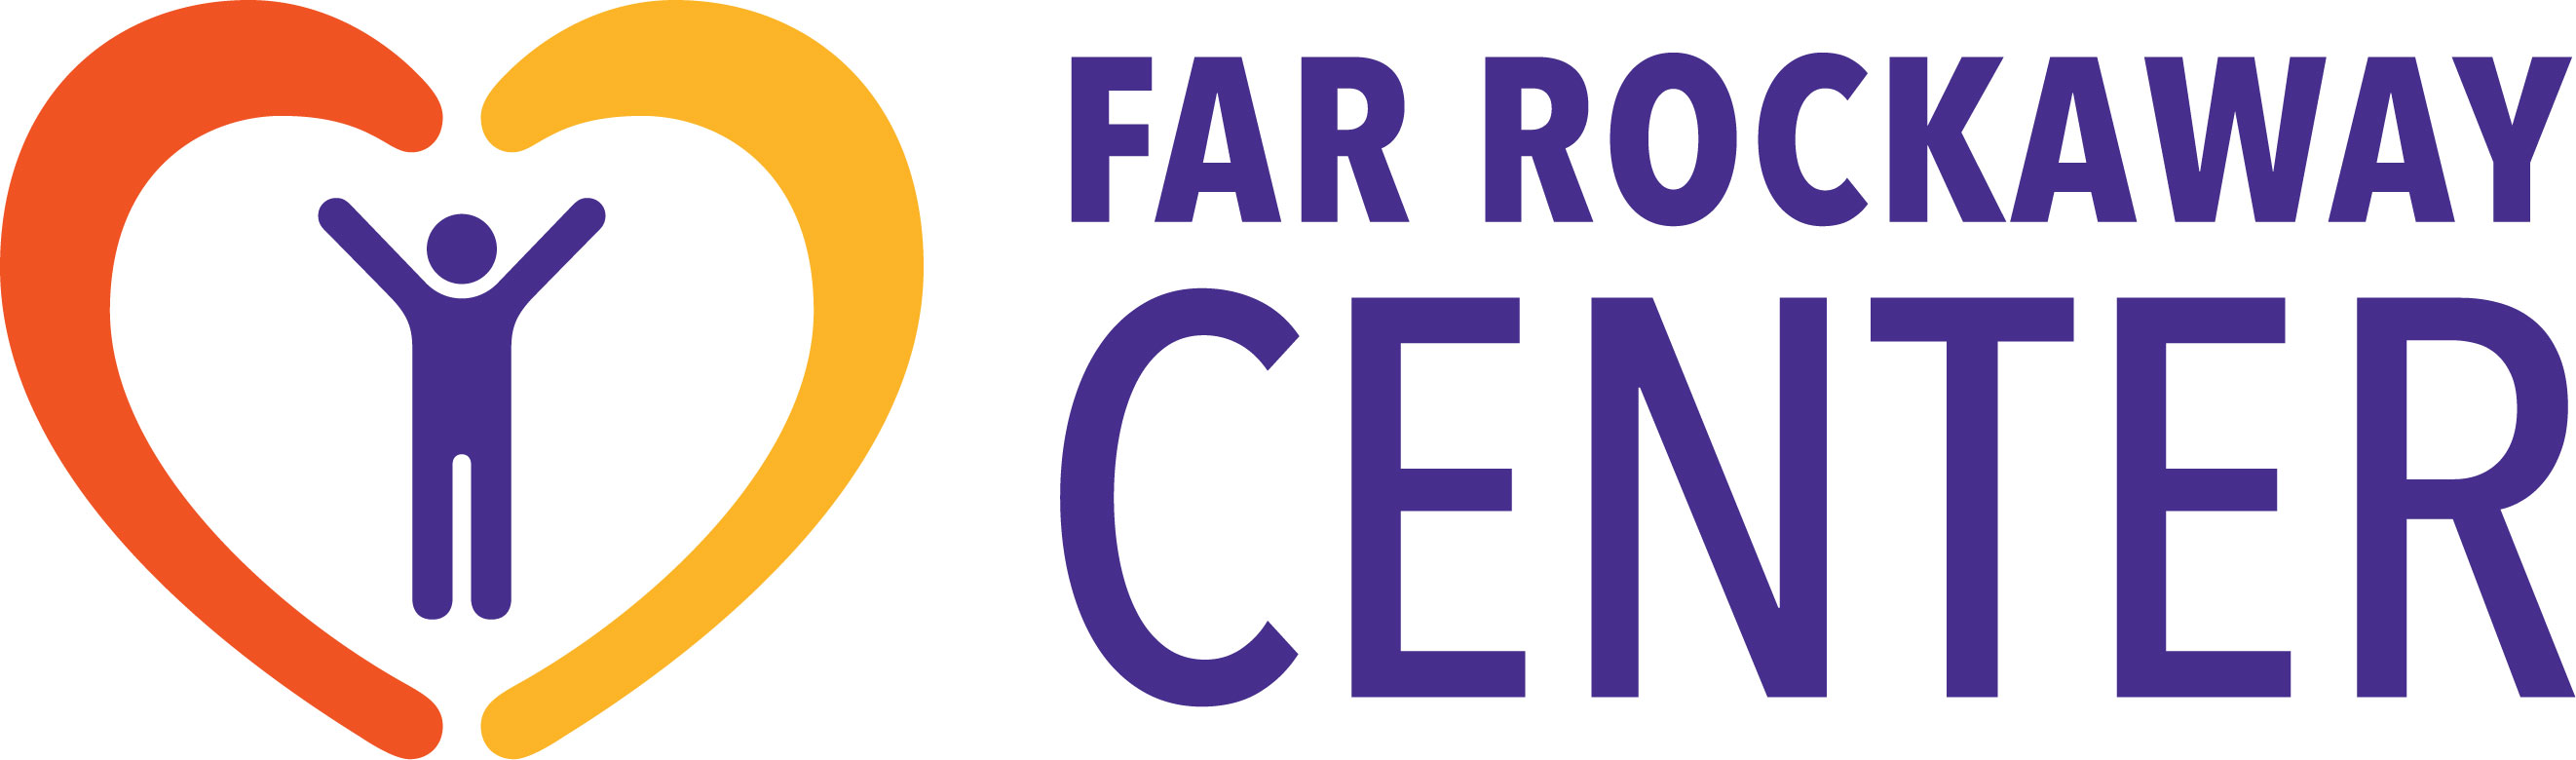 Far Rockaway Center logo